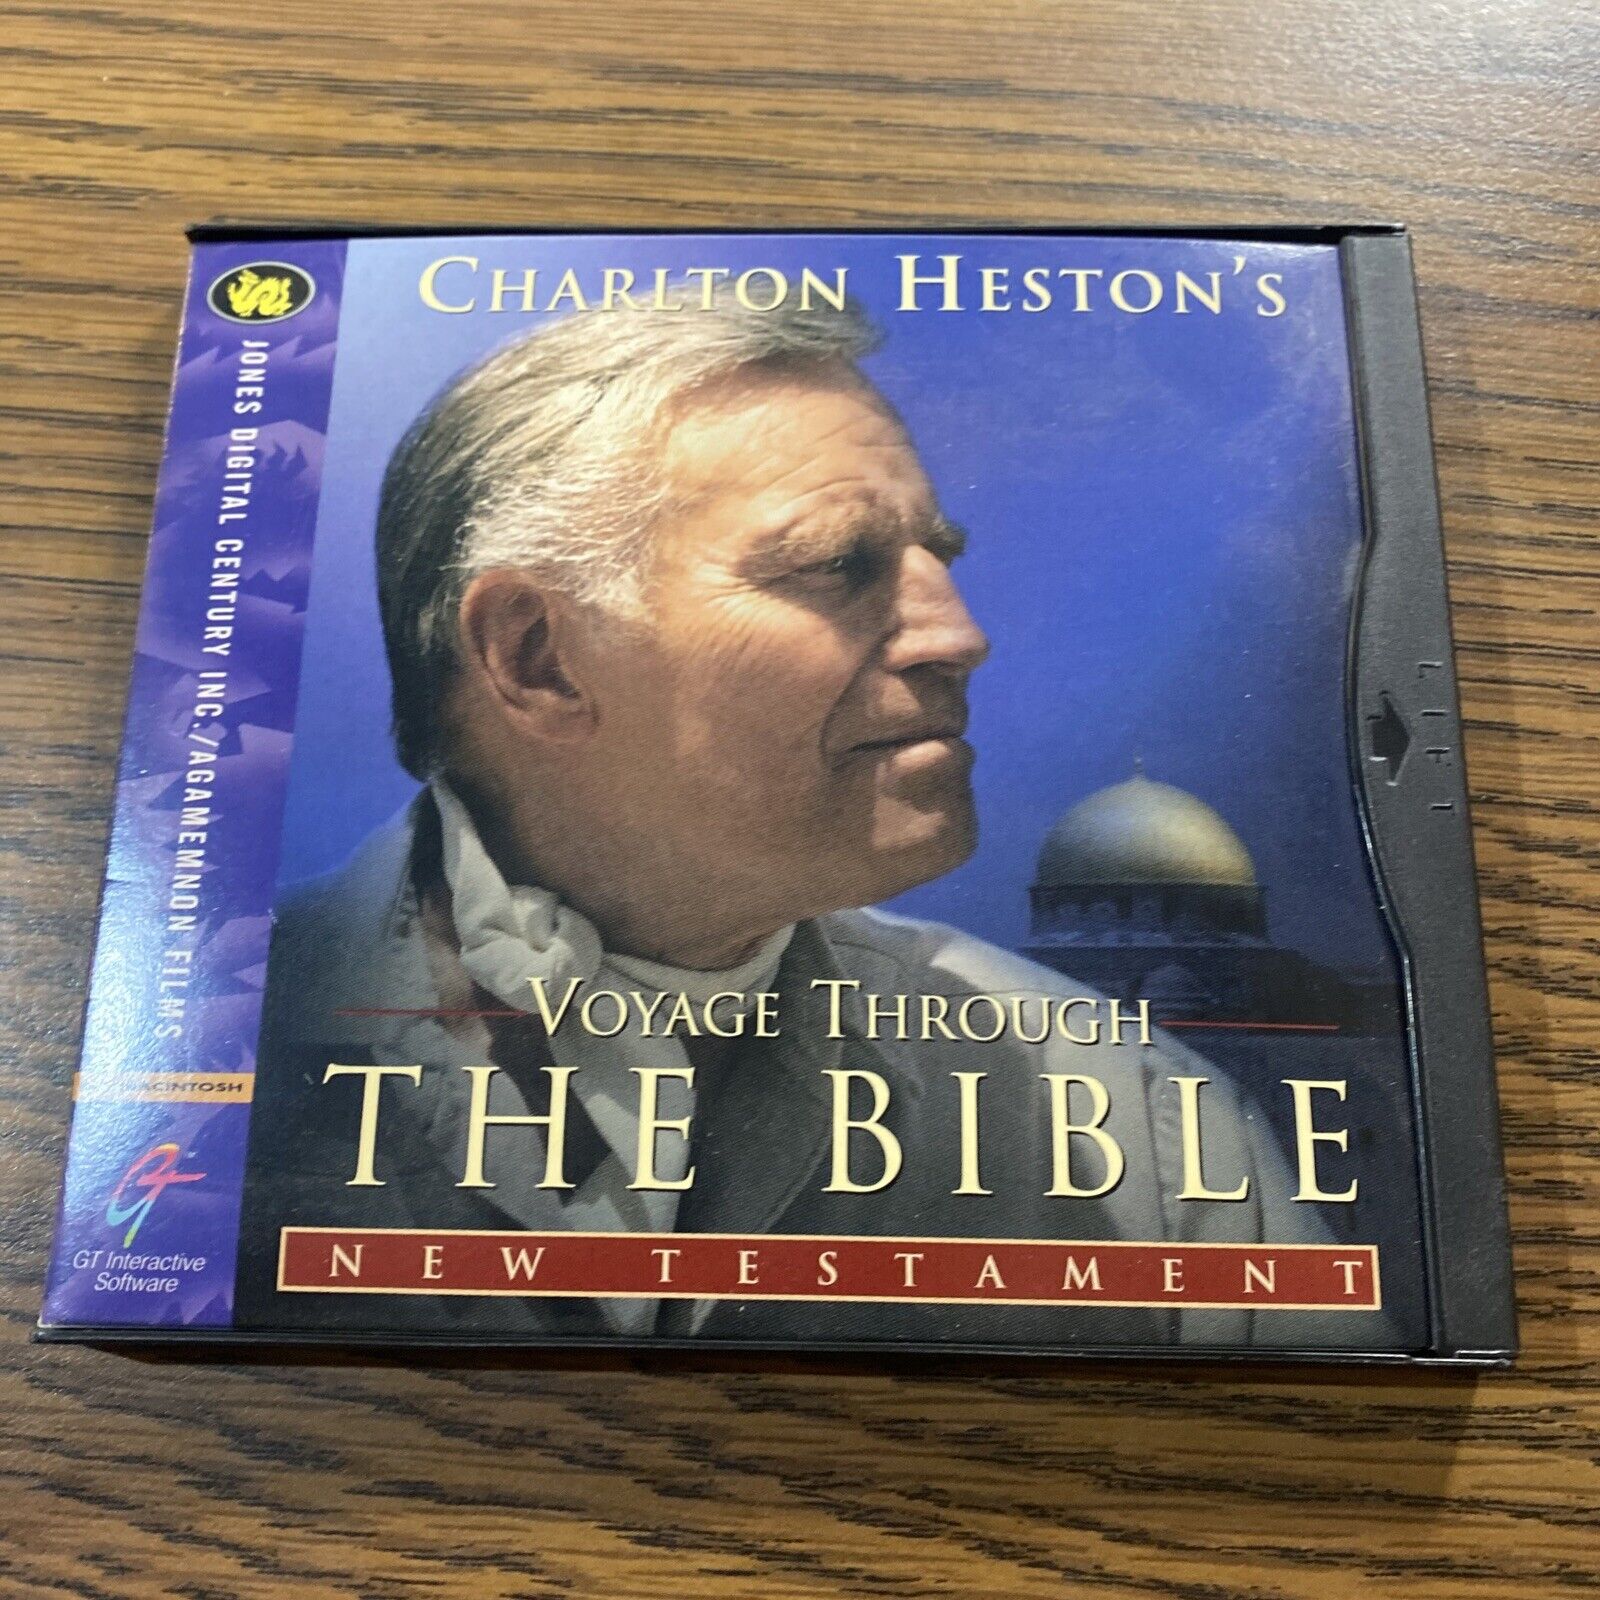 Charlton Heston's Voyage Through The Bible New Testament PC CD journey PC3